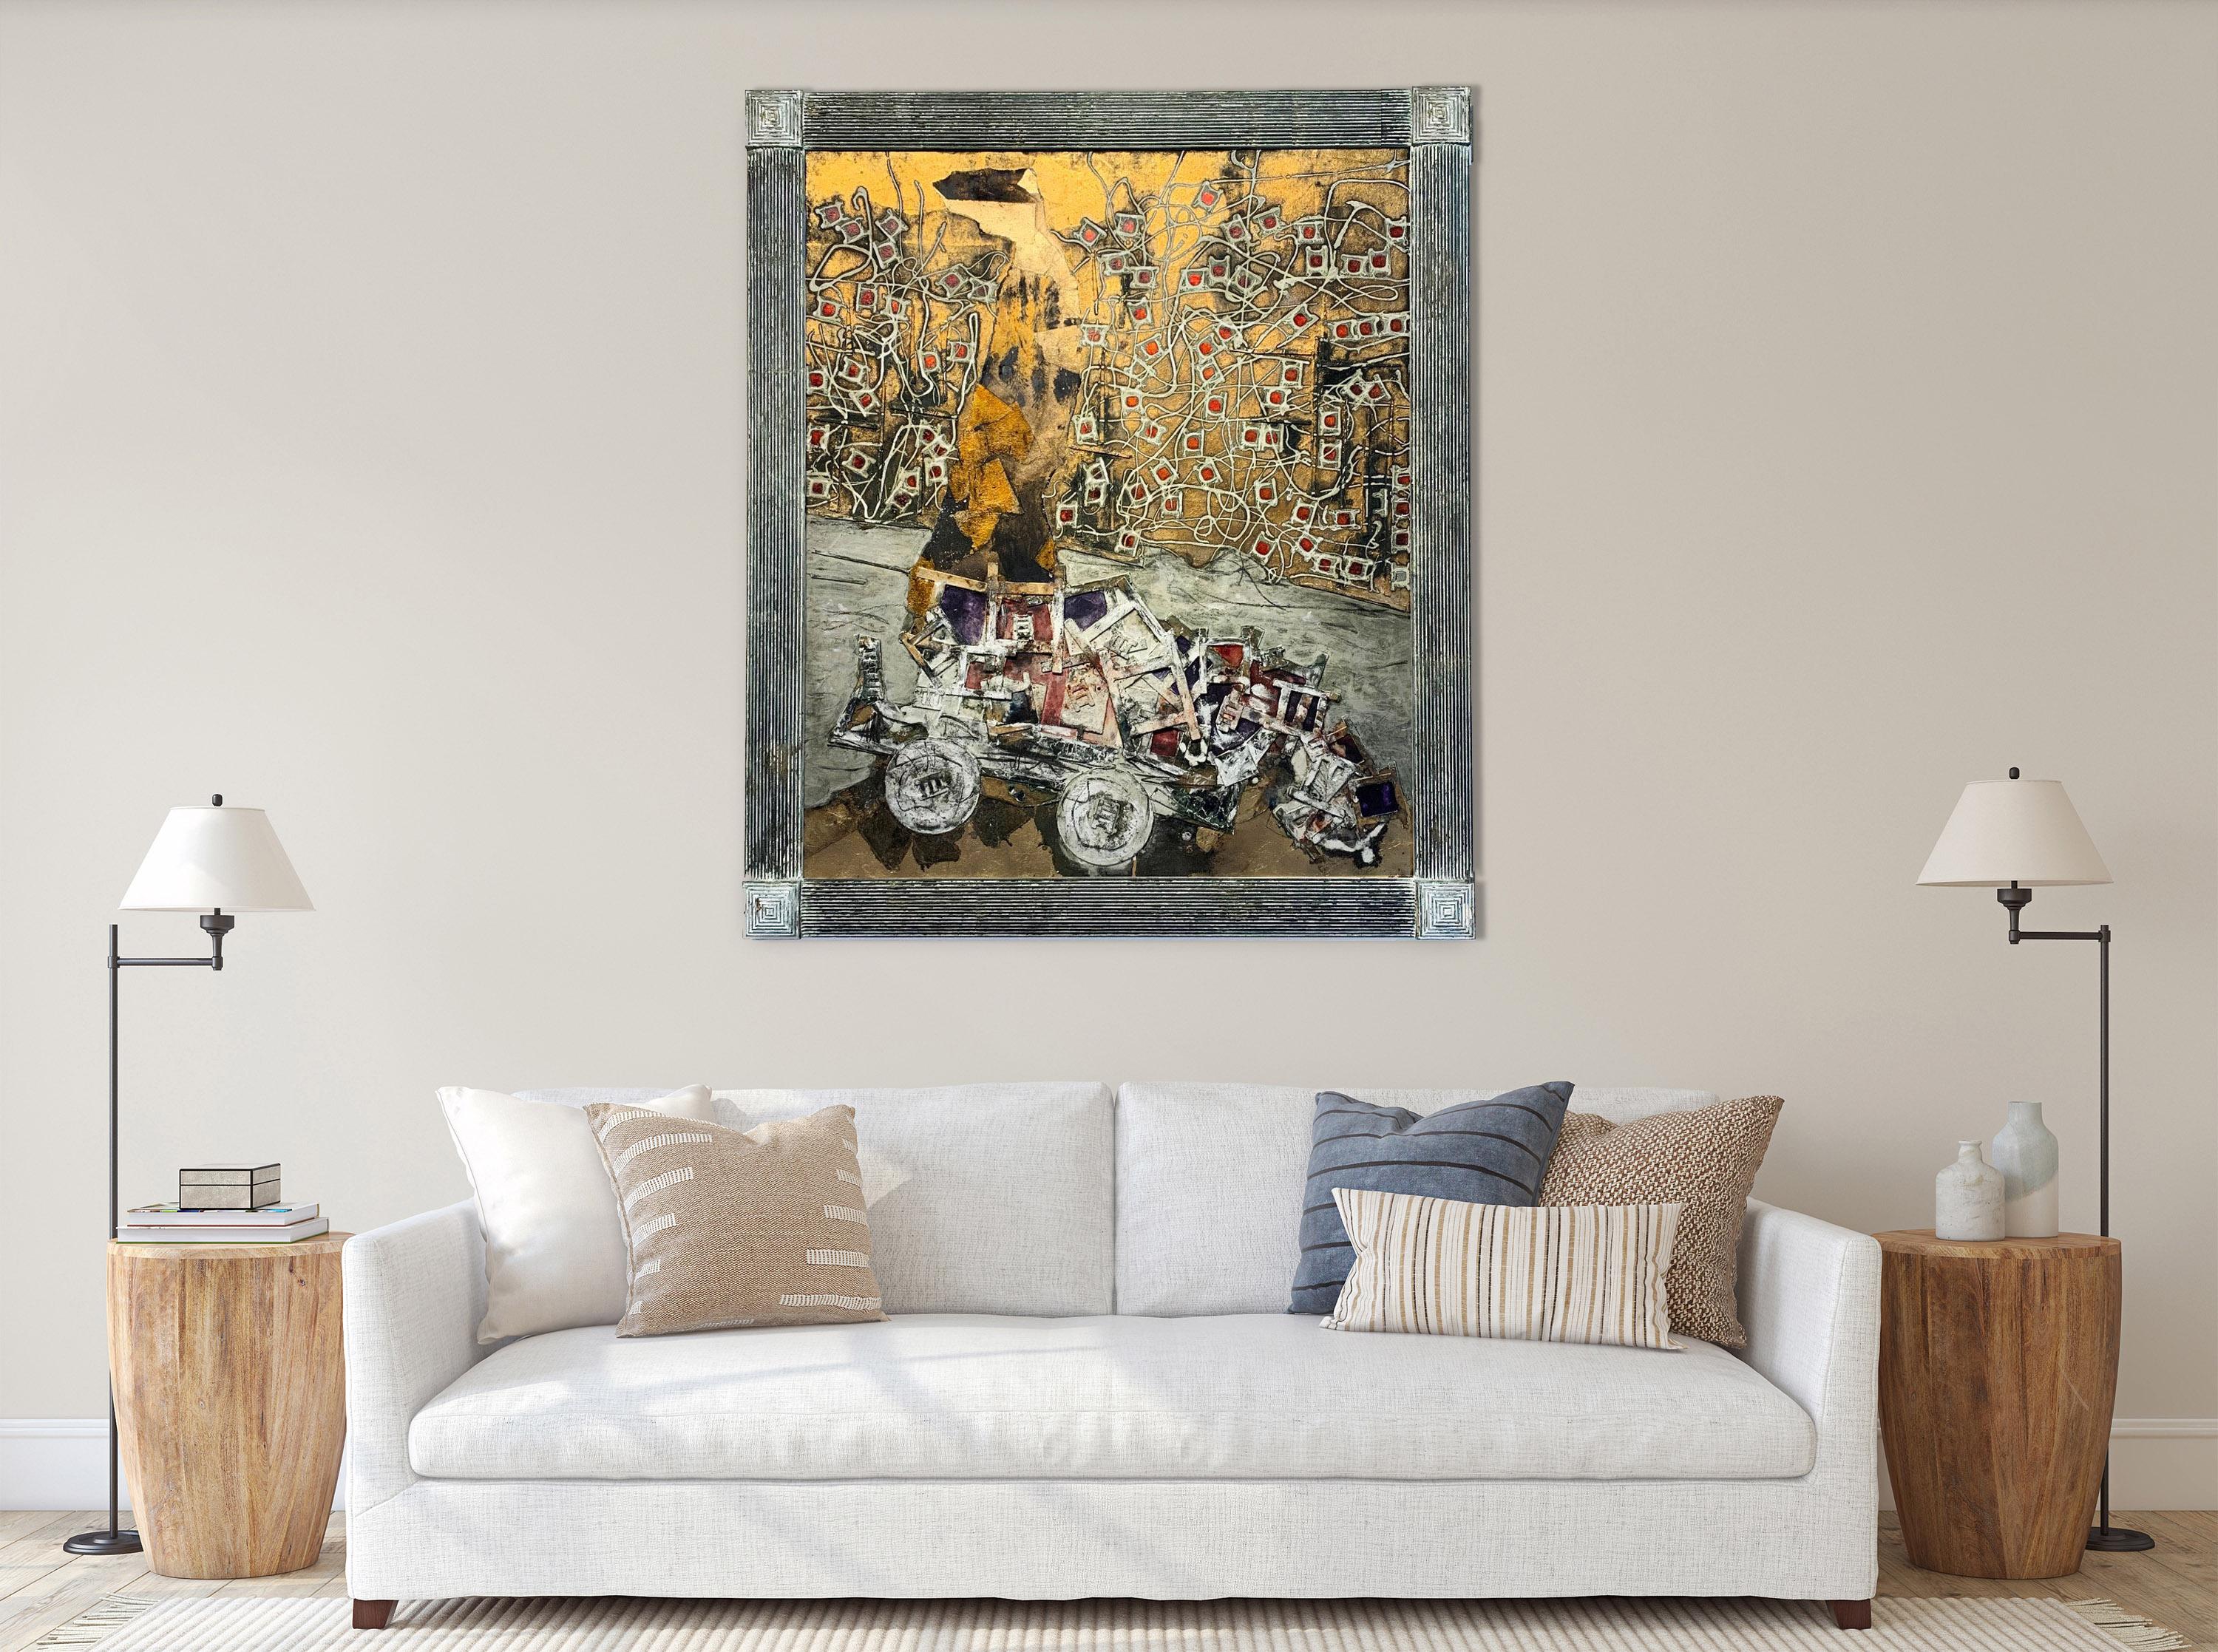 The Cart Of Dreams - Andrea Stella - Figurative Abstract Painting - Mixed Media - Contemporary Mixed Media Art by ANDREA STELLA